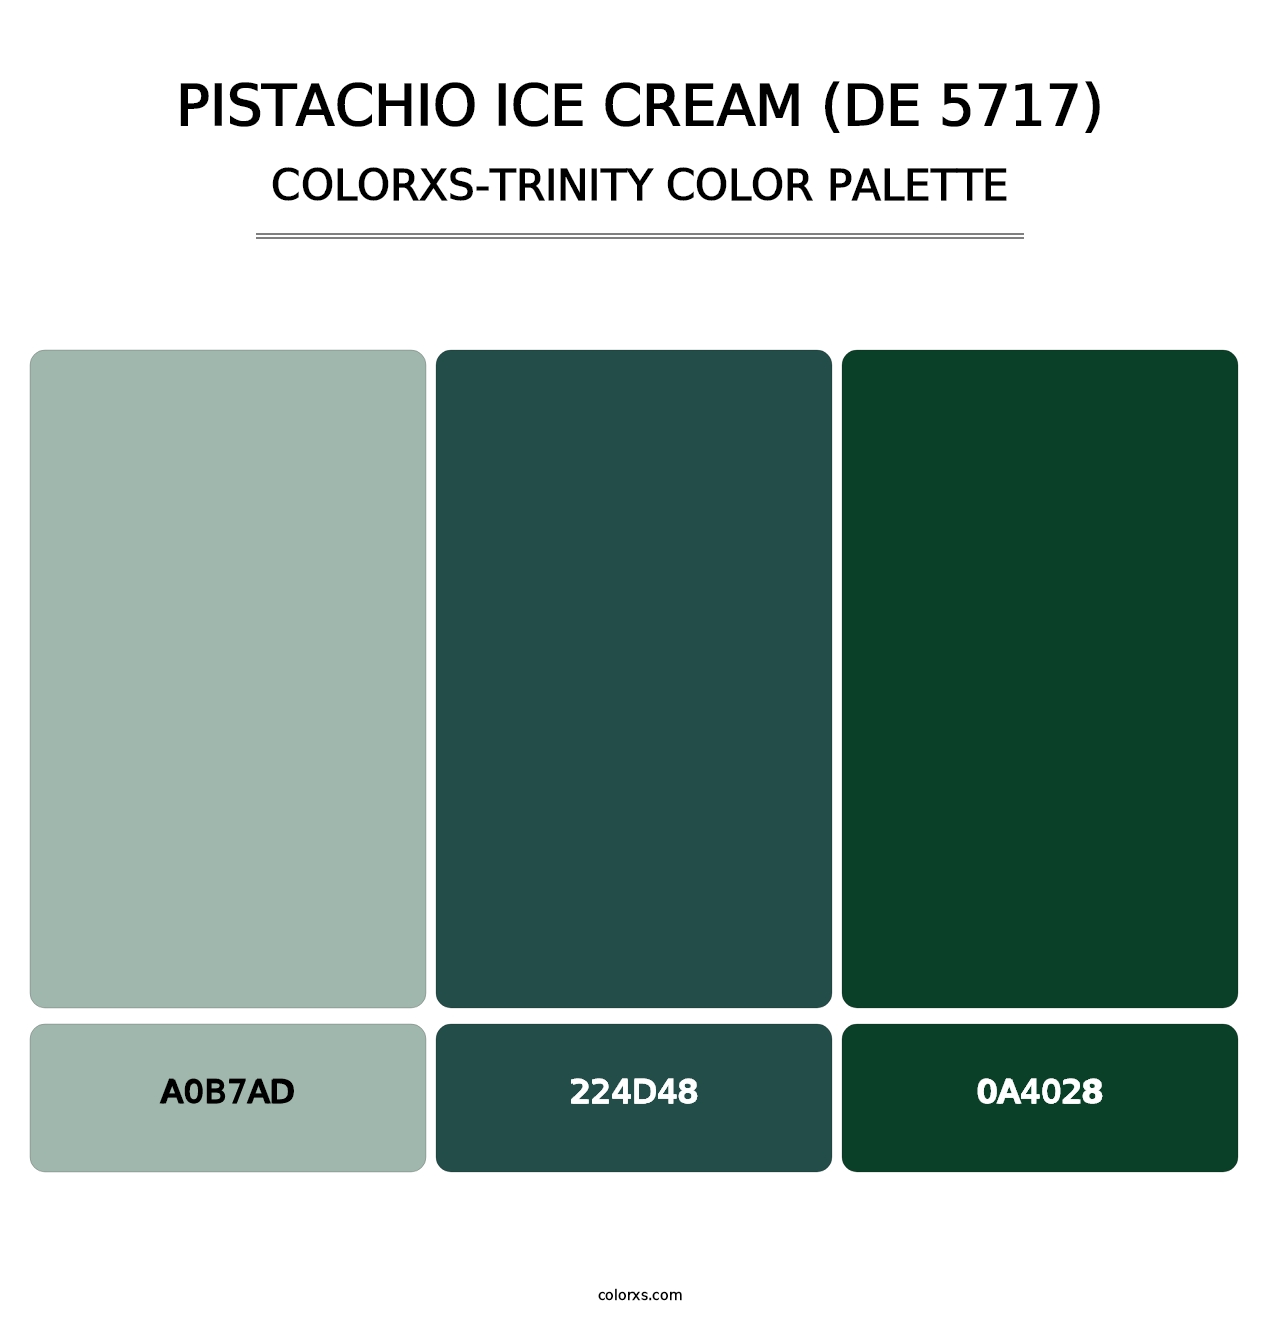 Pistachio Ice Cream (DE 5717) - Colorxs Trinity Palette